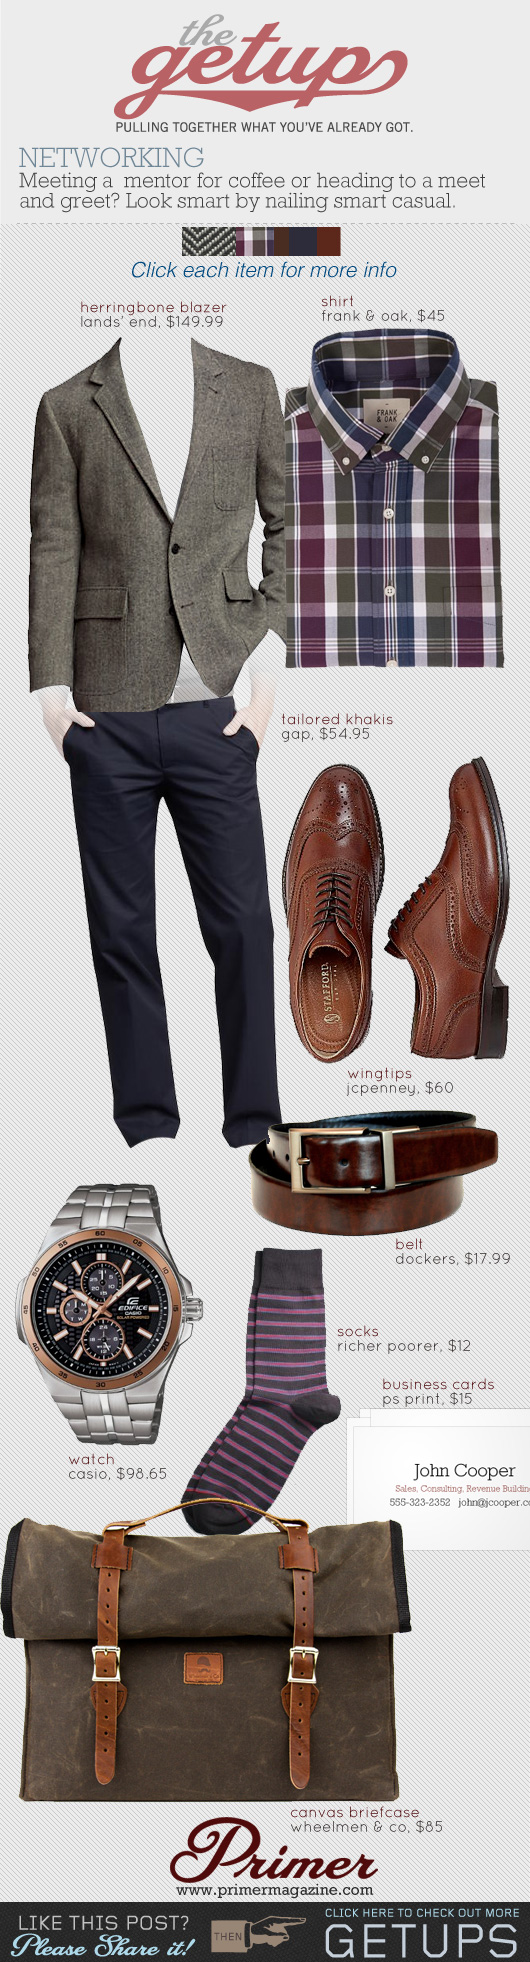 Getup Networking: Gray blazer, plaid shirt, blue dress pants, brown wingtip shoes outfit idea